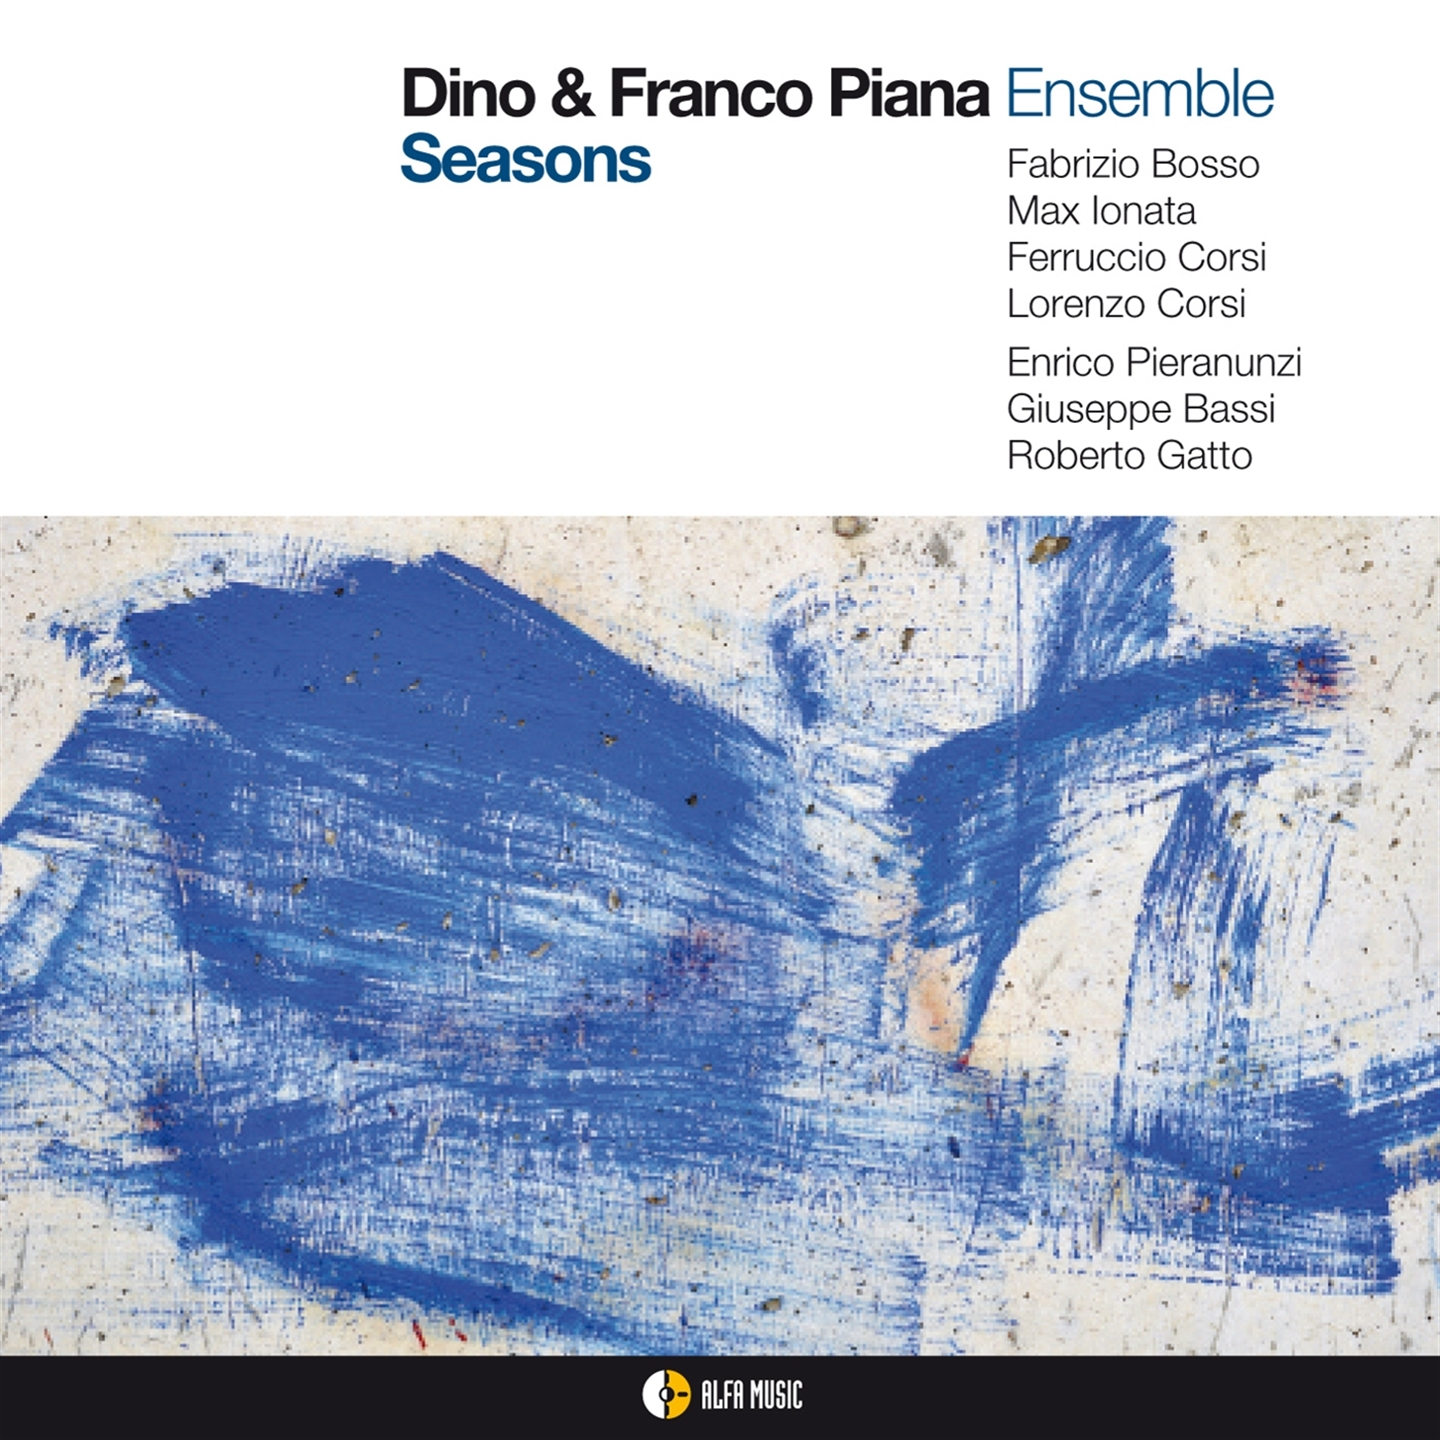 Dino & Franco Piana - Seasons - Photo 1 sur 1